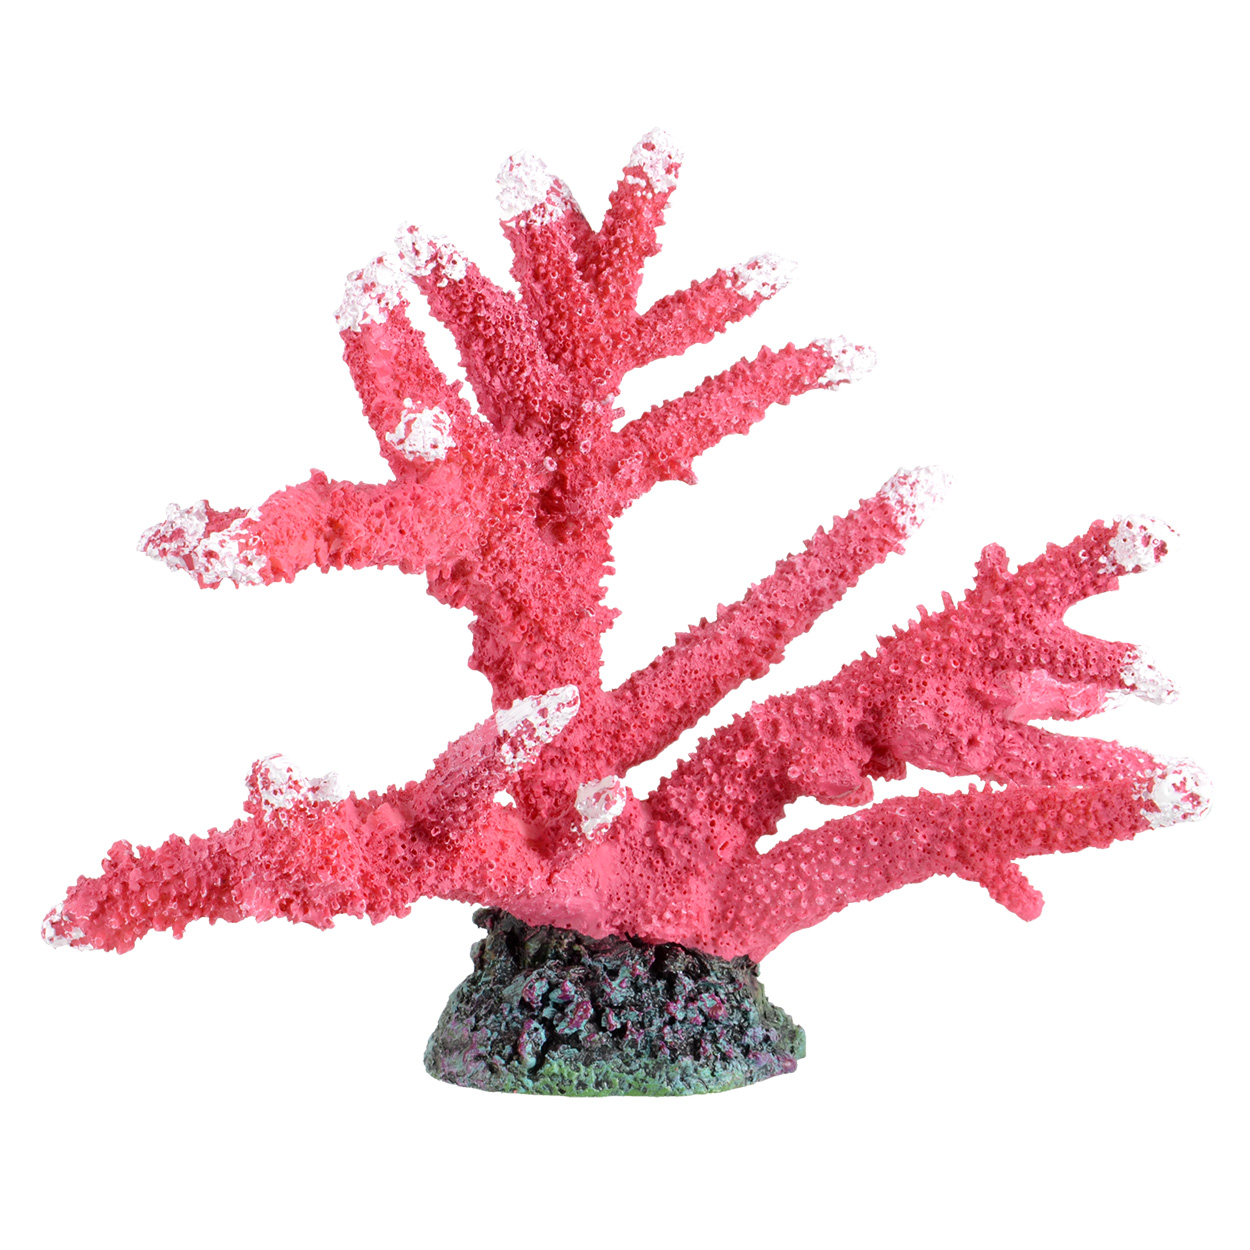 Underwater Treasures Branch Coral - Fire - Decorations - Aquarium Supplies